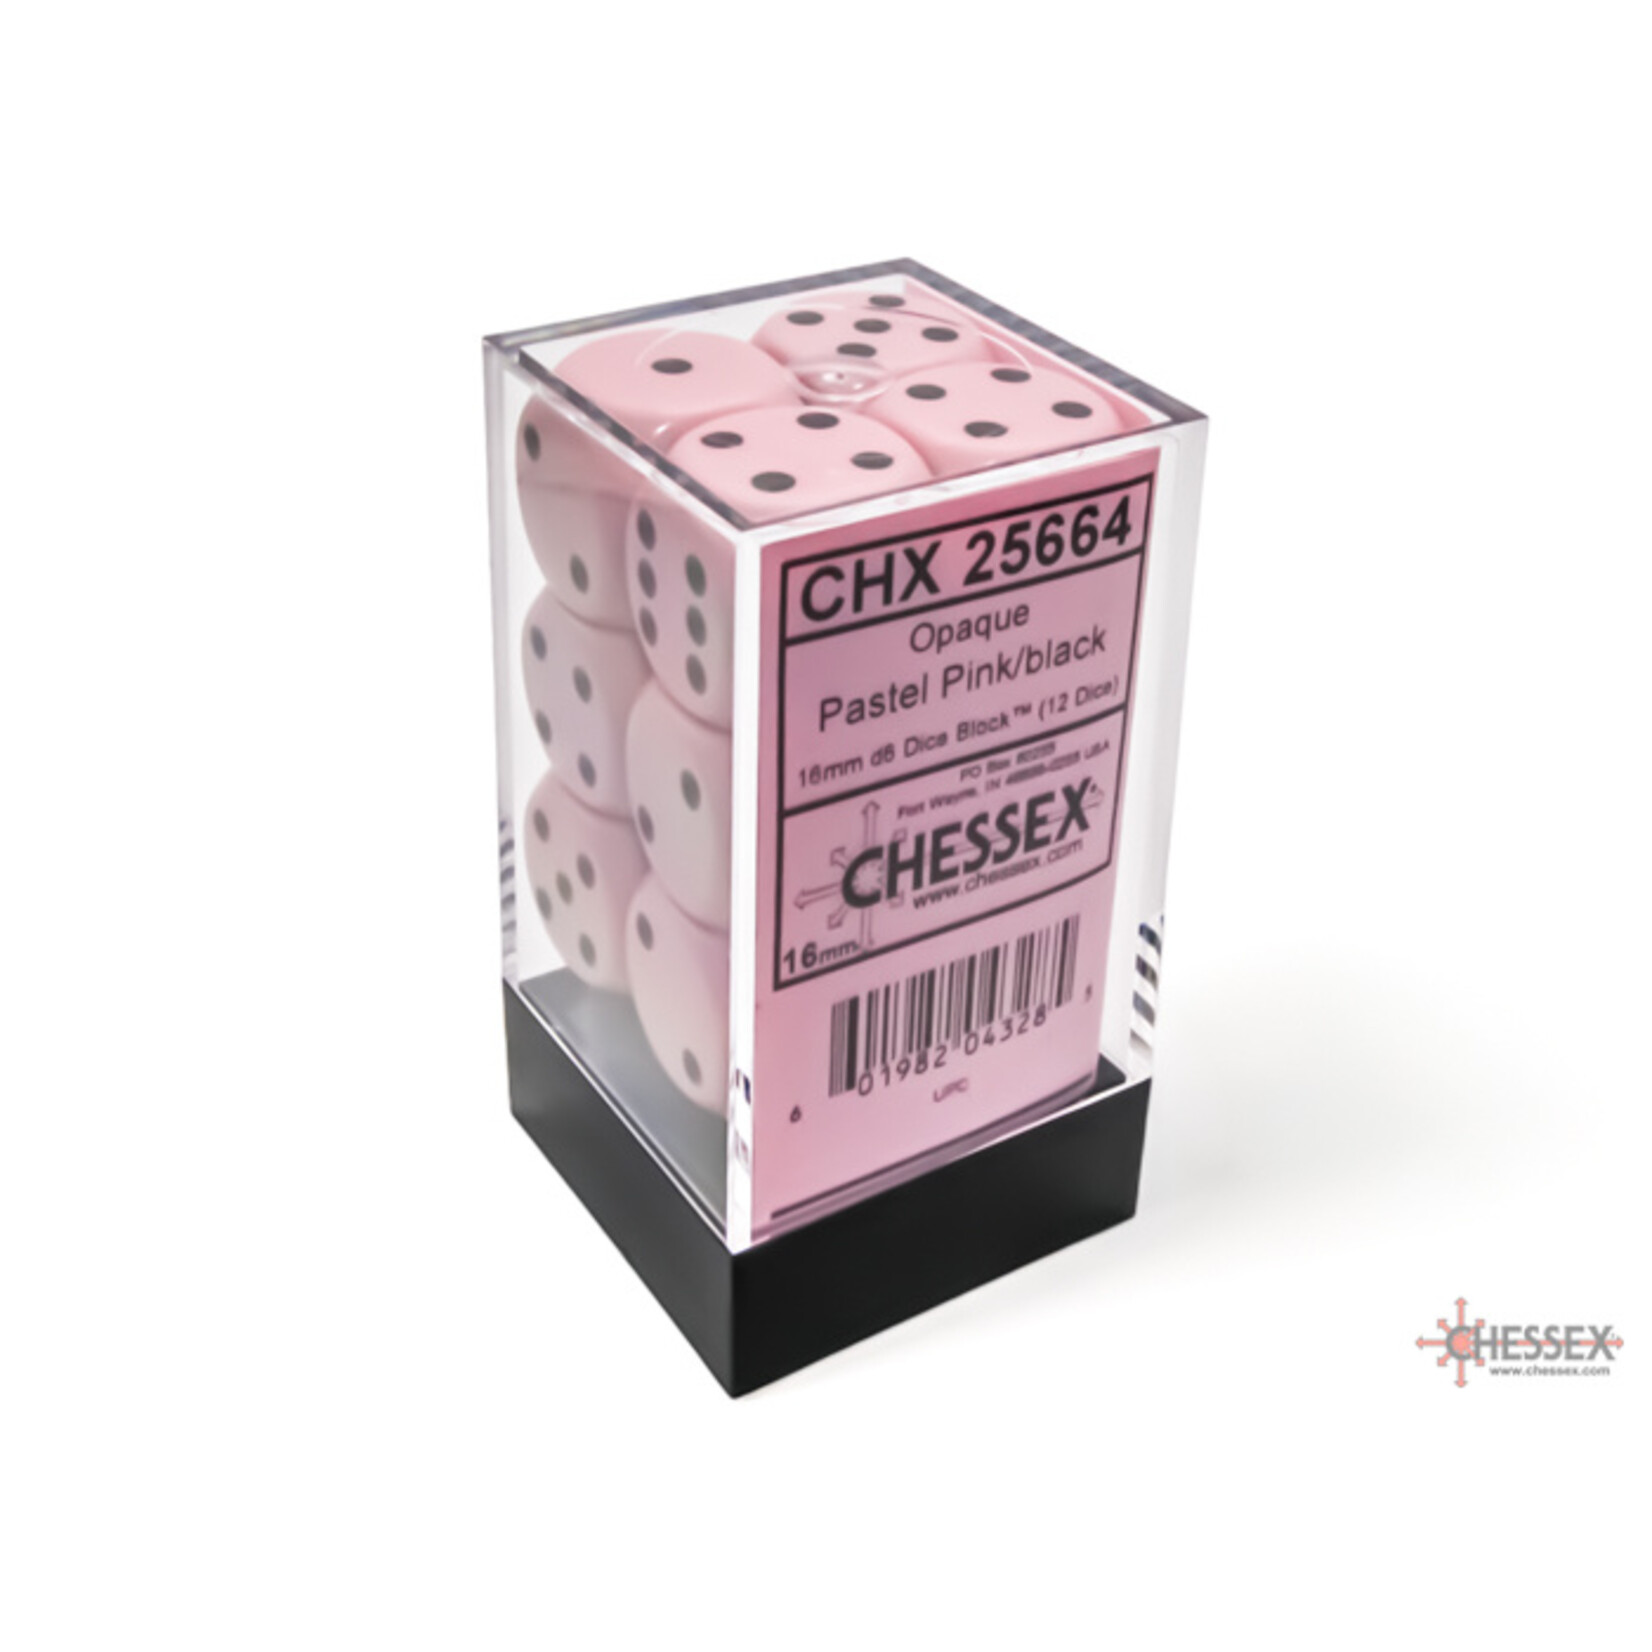 Chessex Chessex 12 x D6 Set Opaque Pastel 16mm - Pink/Black